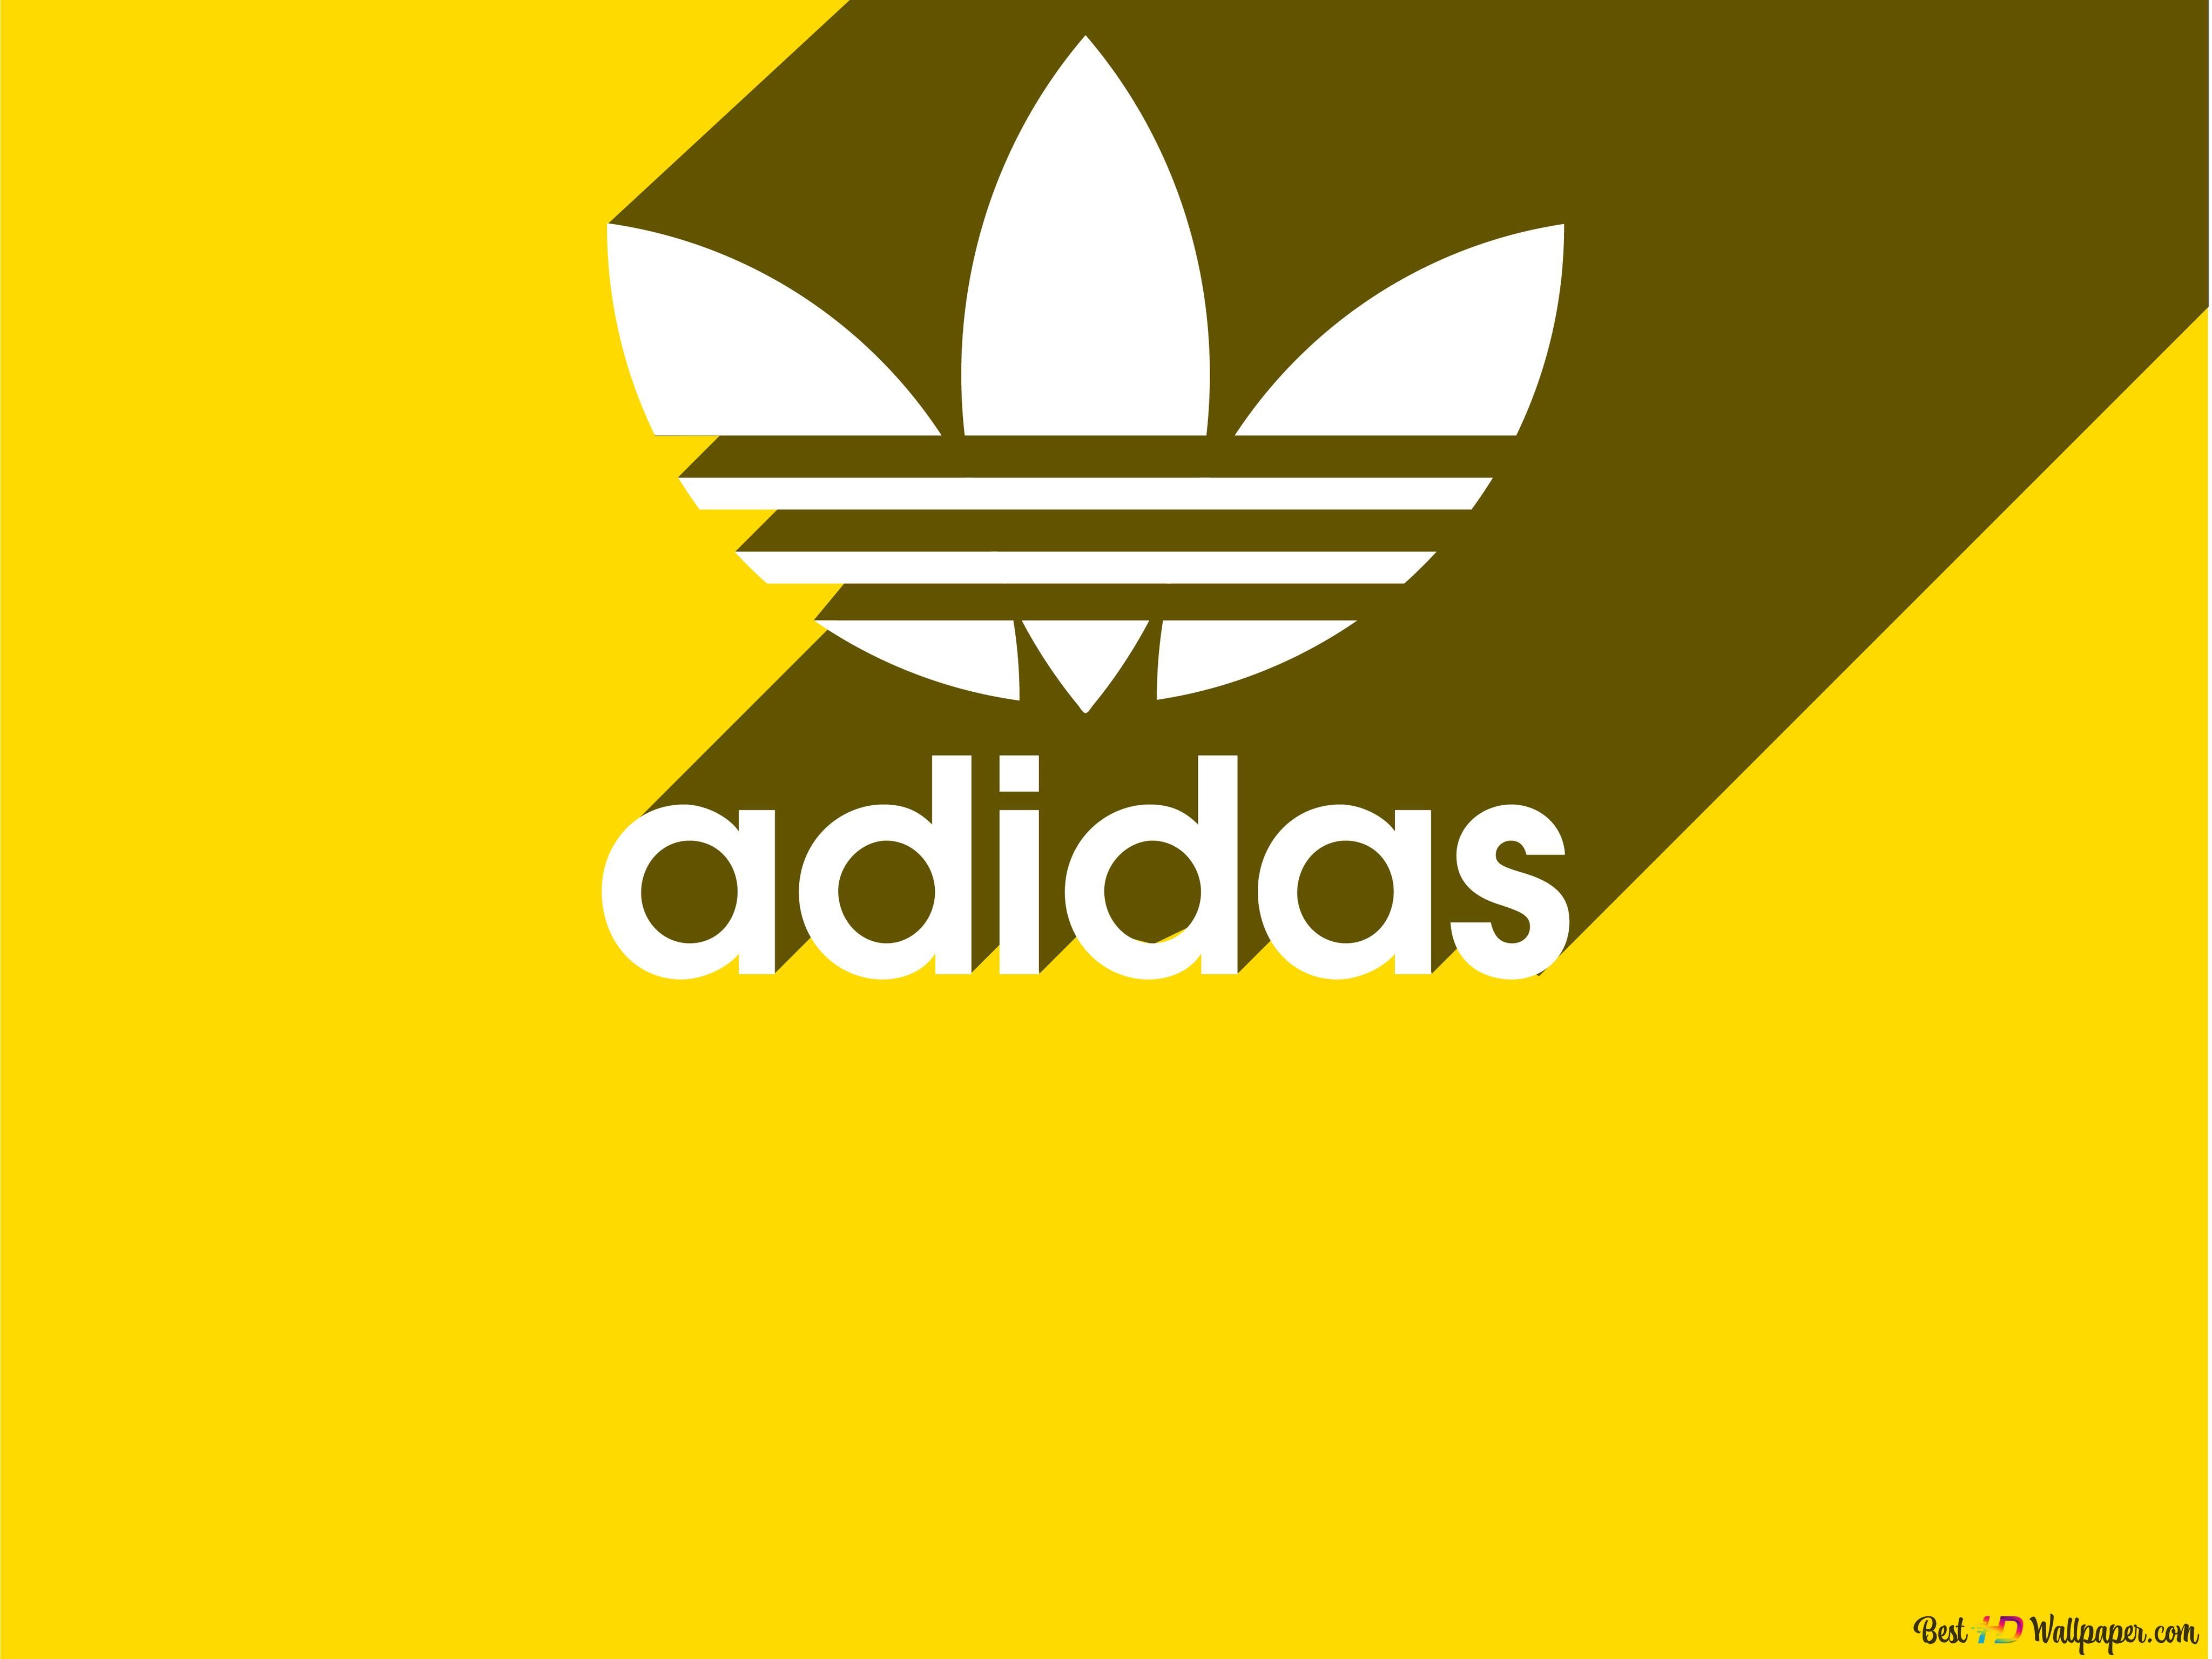  Adidas Hintergrundbild 4096x3072. yellow adidas 4K wallpaper download